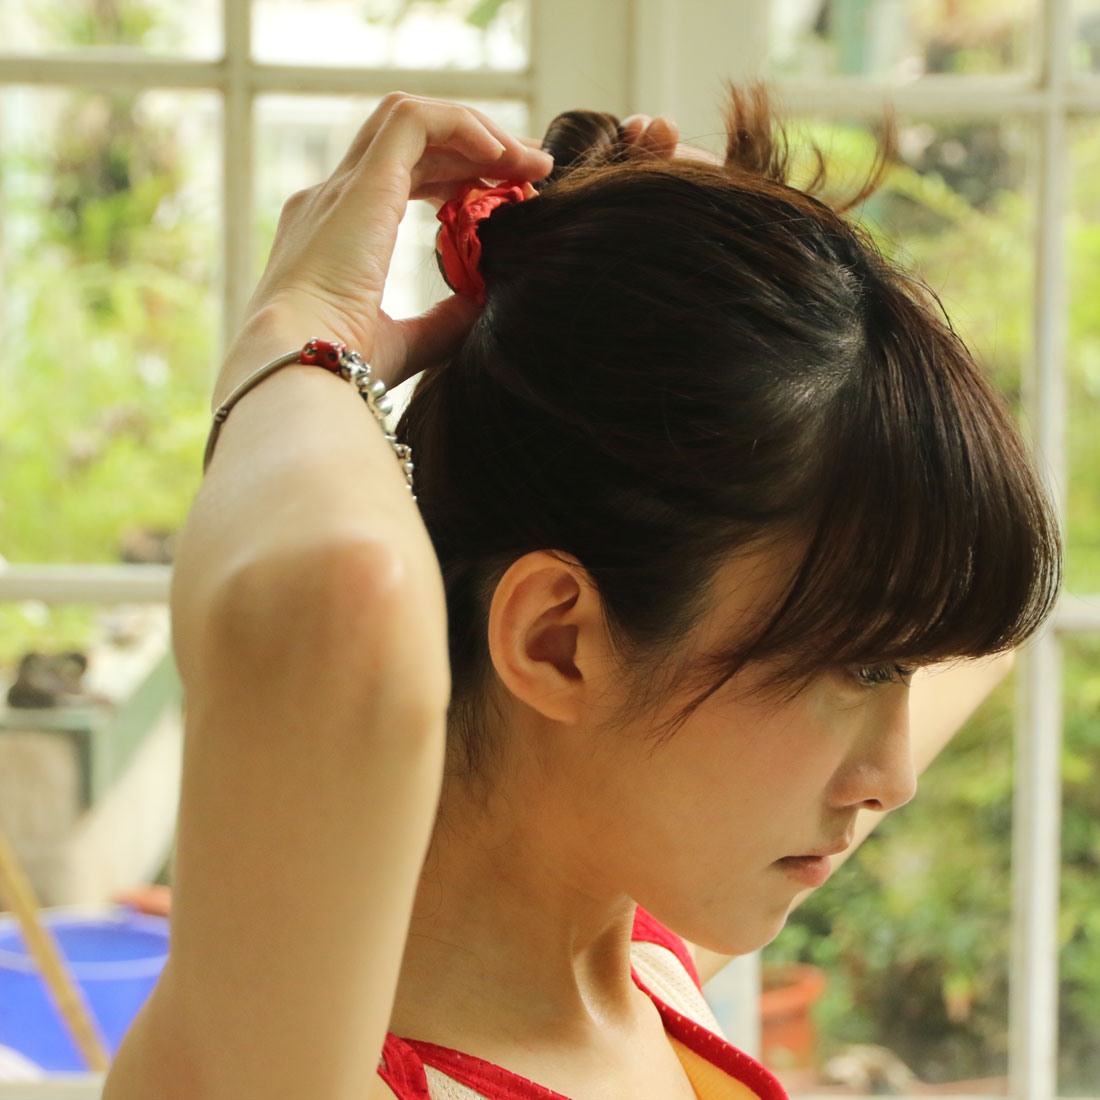 Buy Poppy Pulse Red silk fashion scrunchie online paris taipei tokyo dover street market selfridges isetan